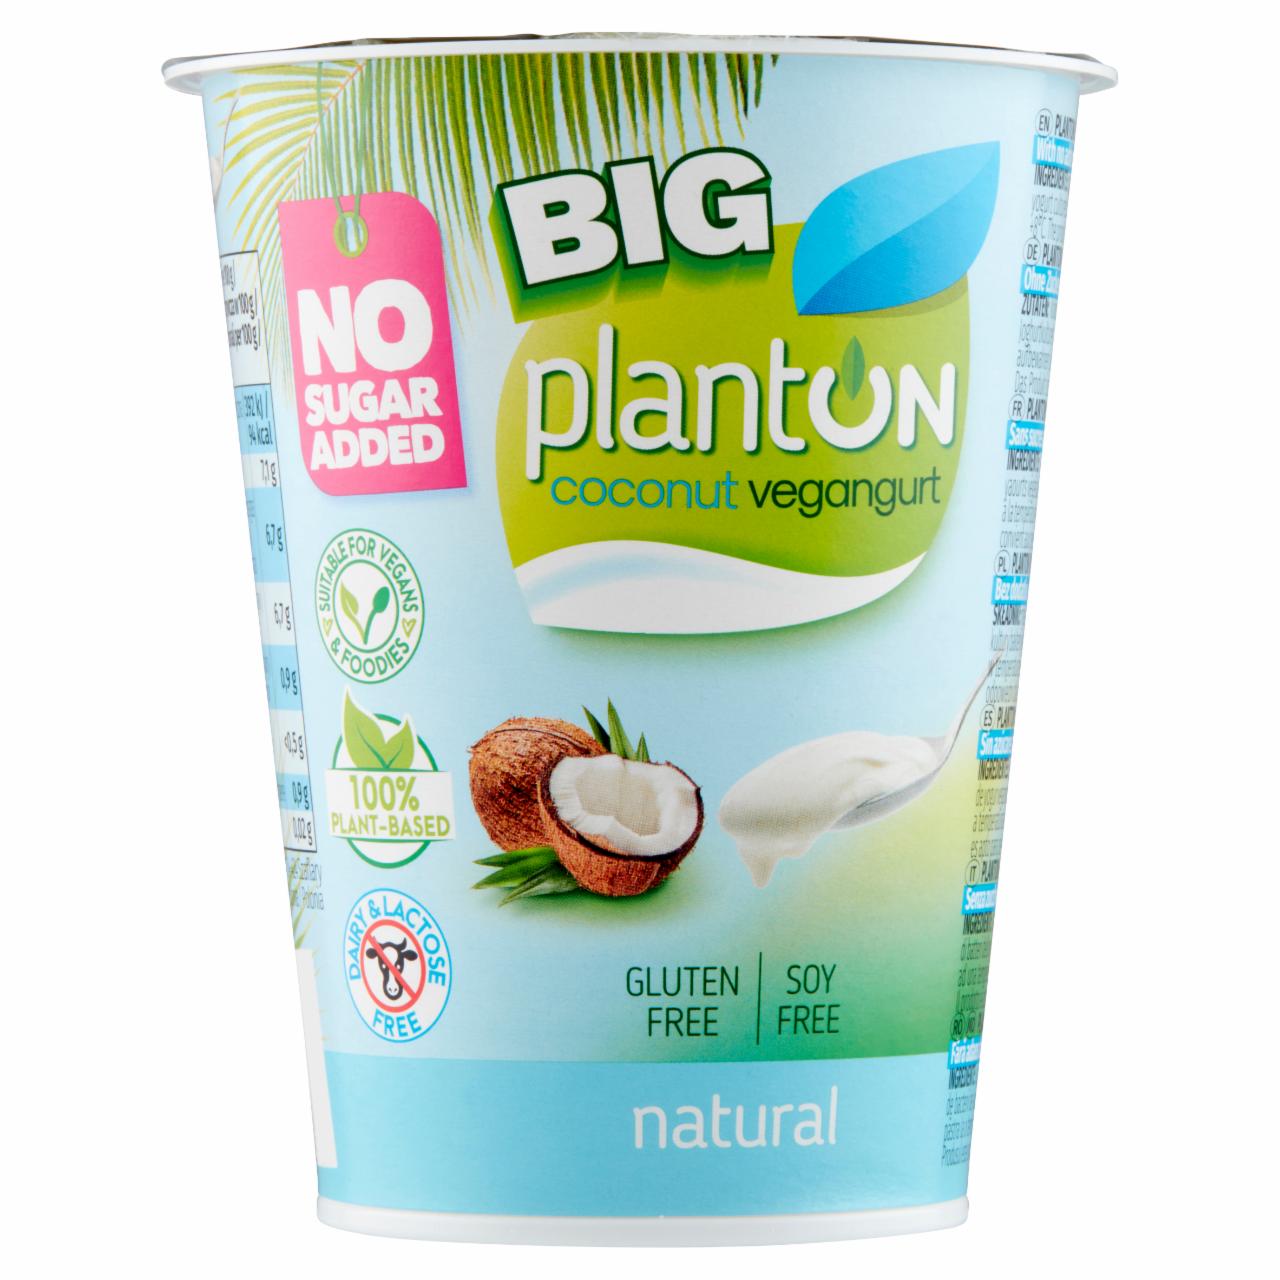 Zdjęcia - Planton Big Kokosowy vegangurt natural 400 g